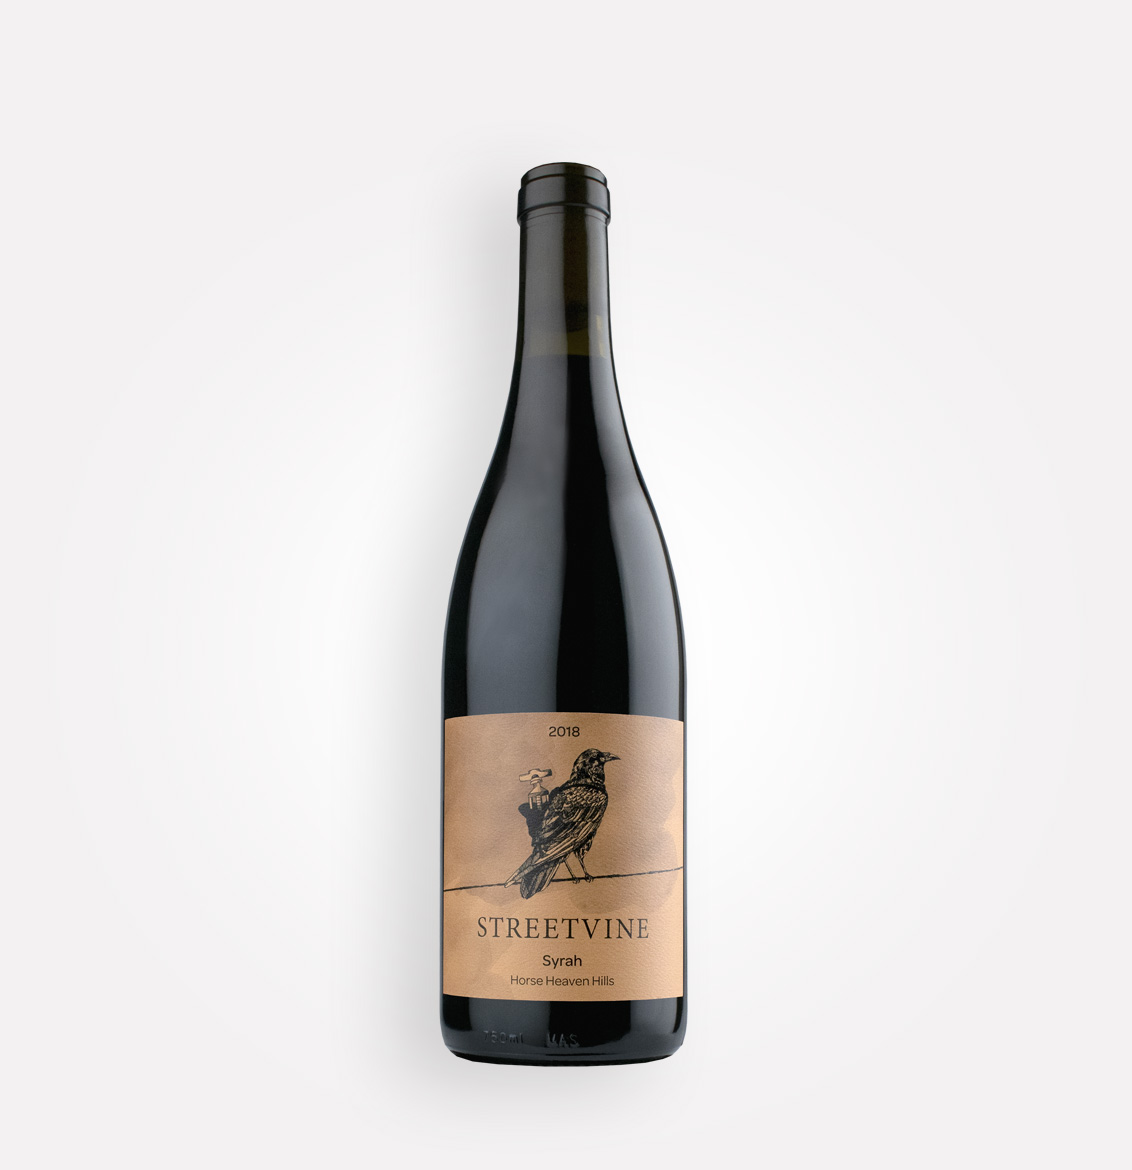 Bottle of 2018 Streetvine Syrah wine from Washington's Horse Heaven Hills AVA